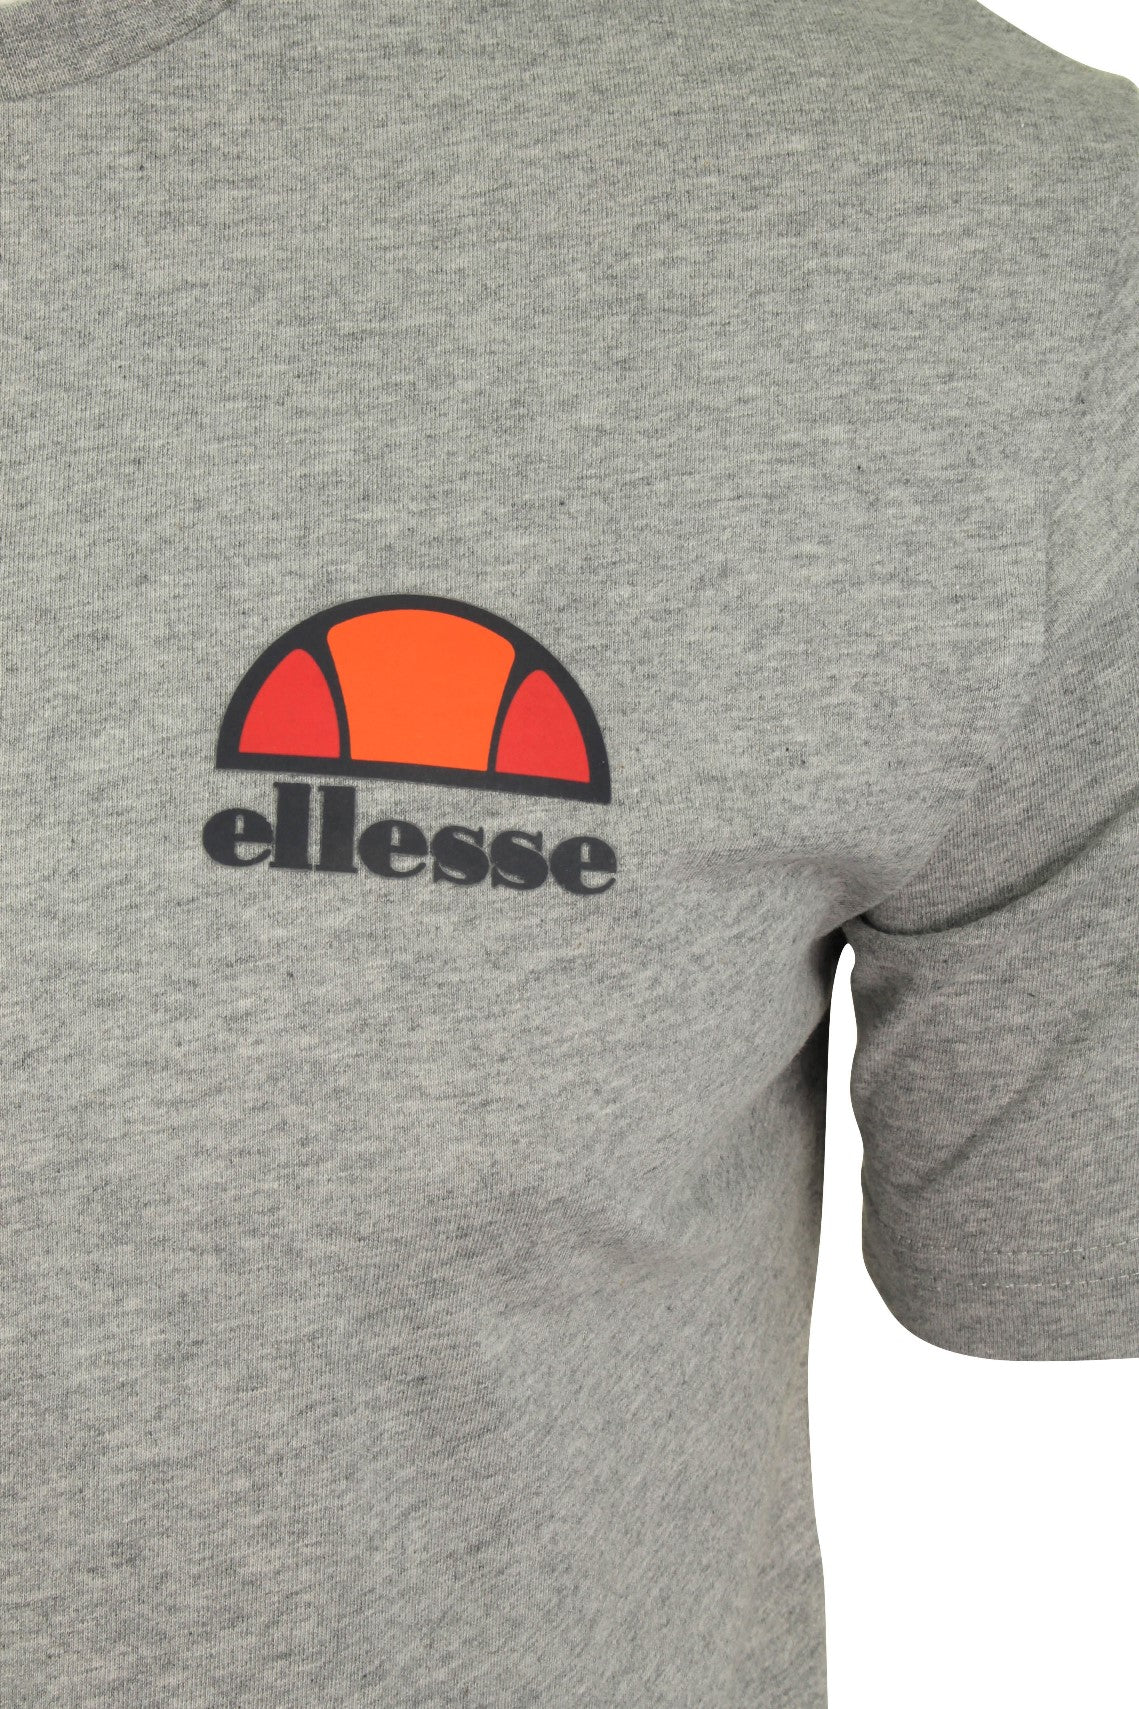 Mens Ellesse T-Shirt 'Canaletto' Short Sleeved, 02, Shs04548, Athletic Grey